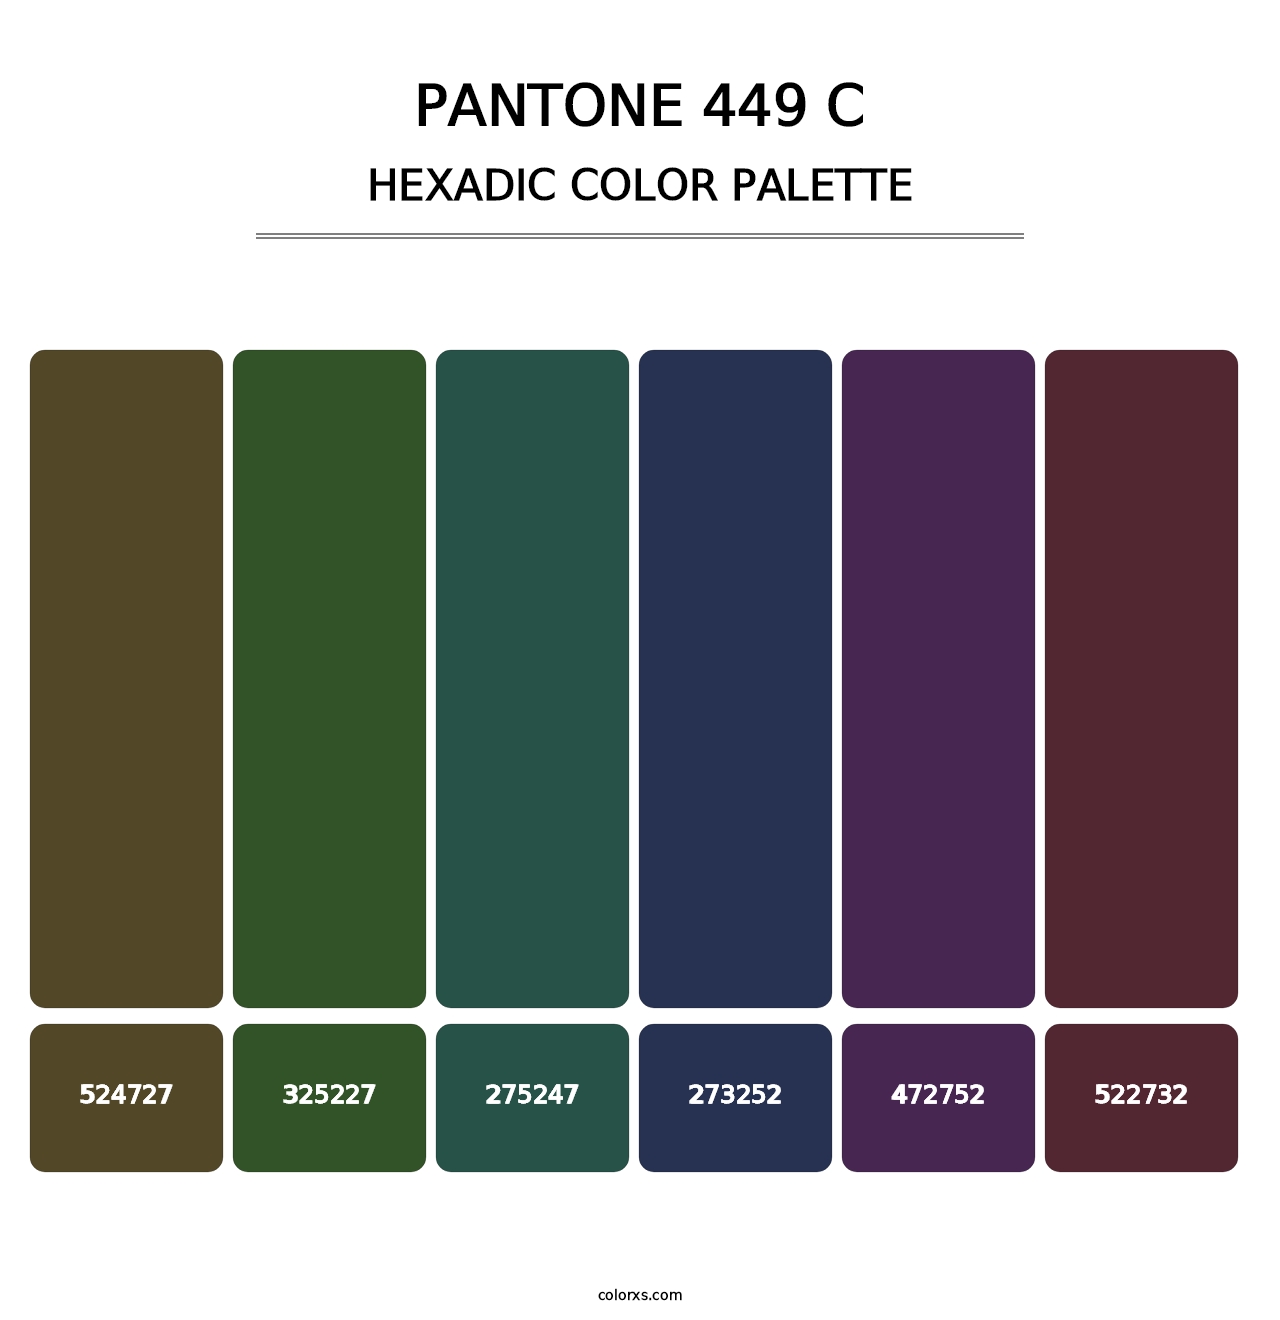 PANTONE 449 C - Hexadic Color Palette